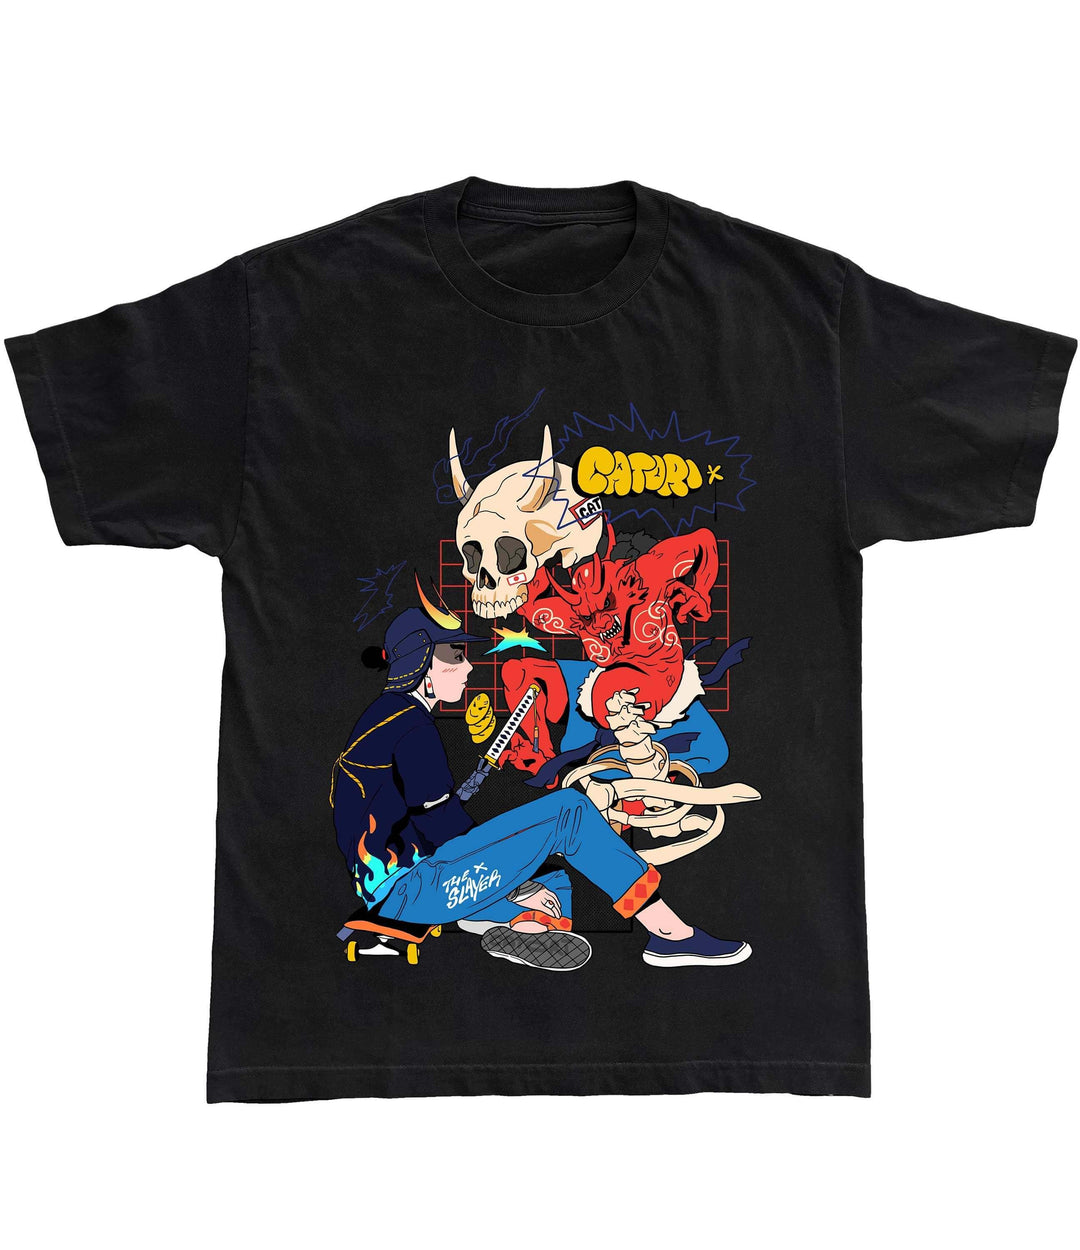 The Slayer T-Shirt at Catori Clothing | Graphic & Anime Tees, Hoodies & Sweatshirts 